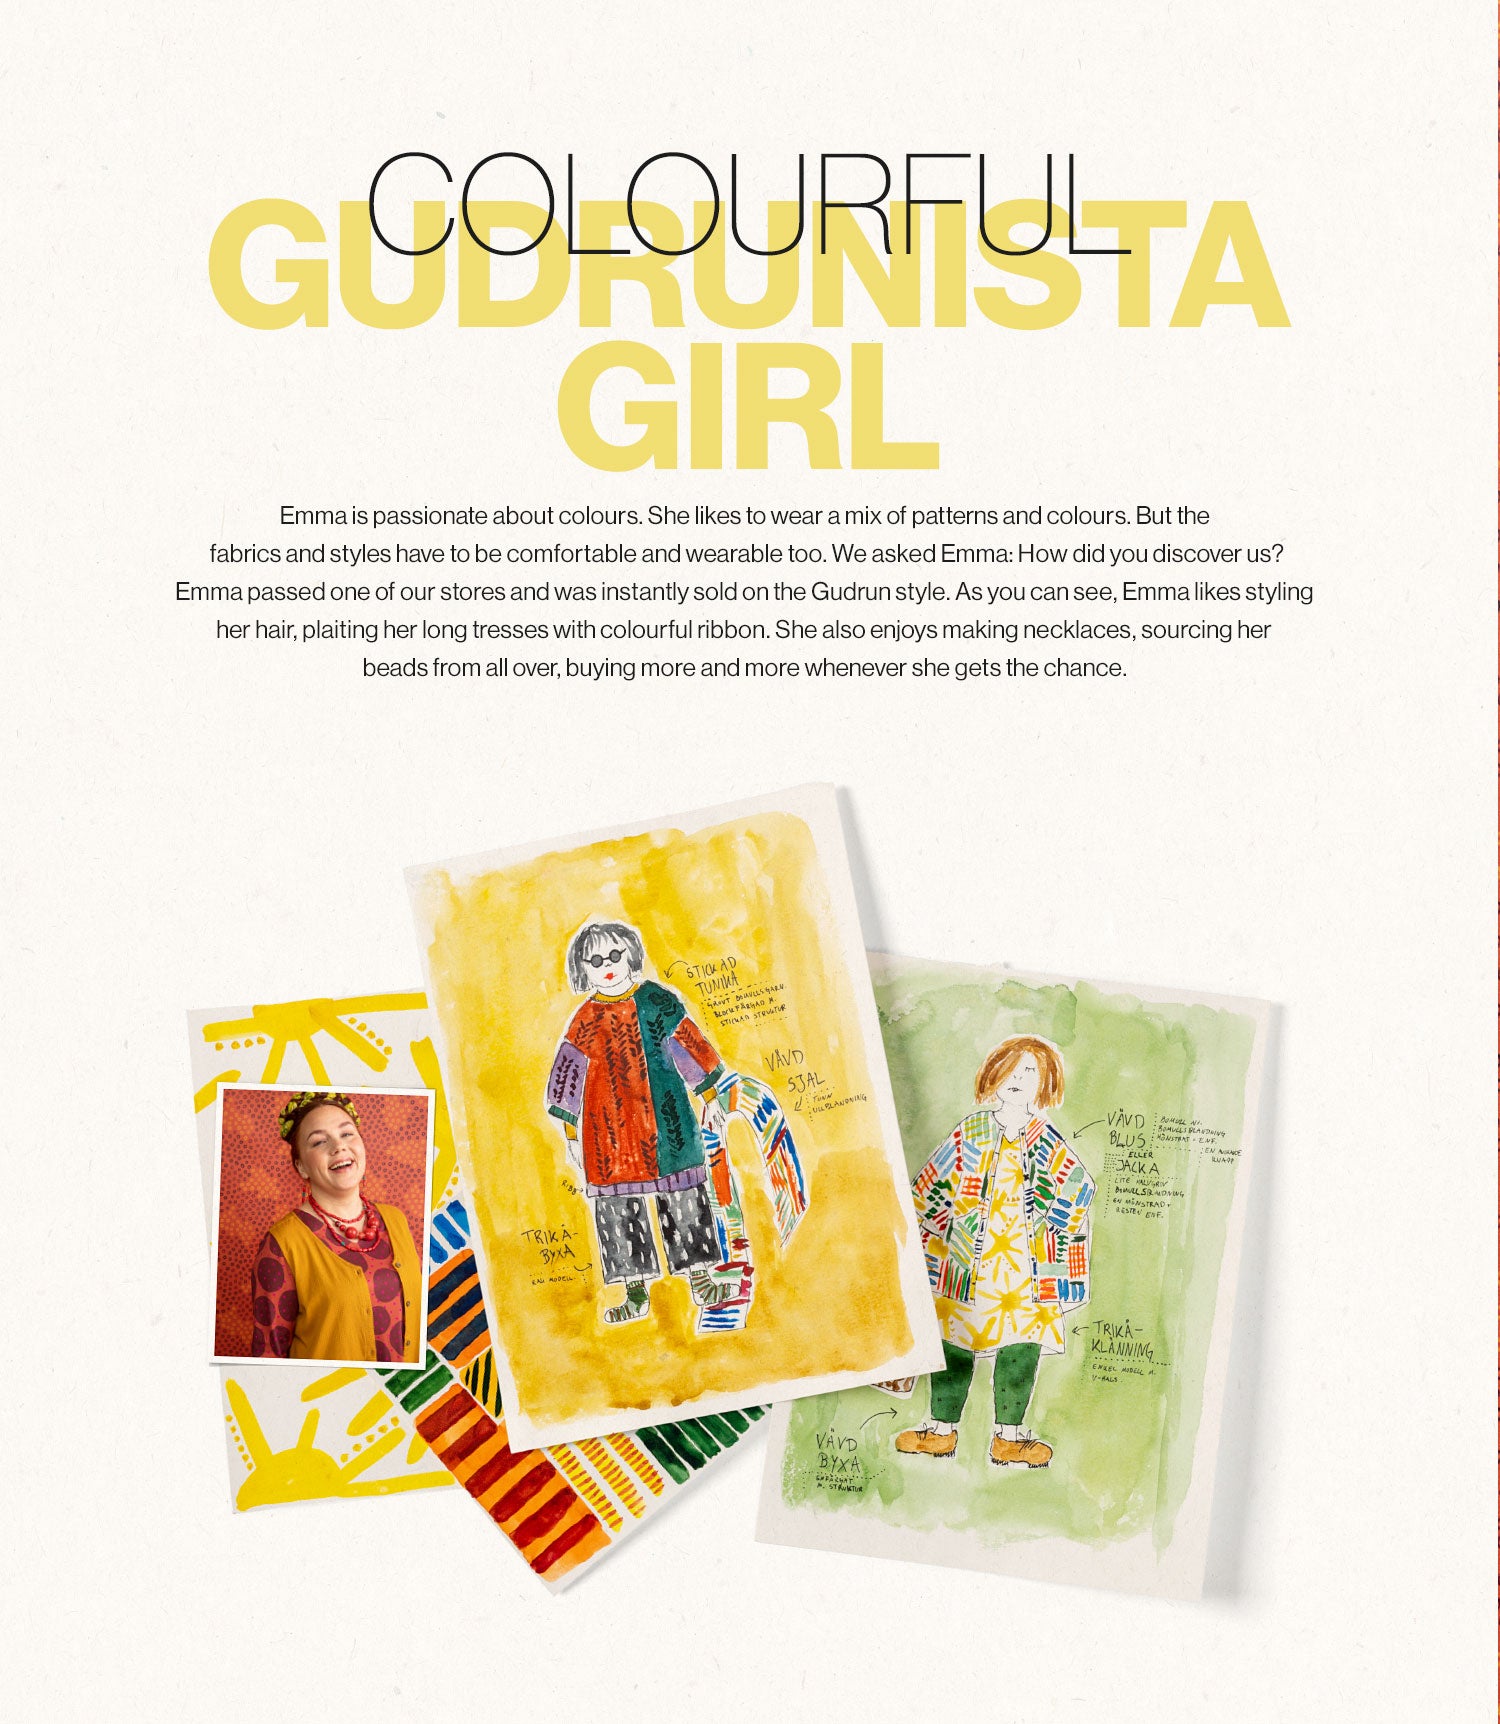 Colourful Gudrunista girl